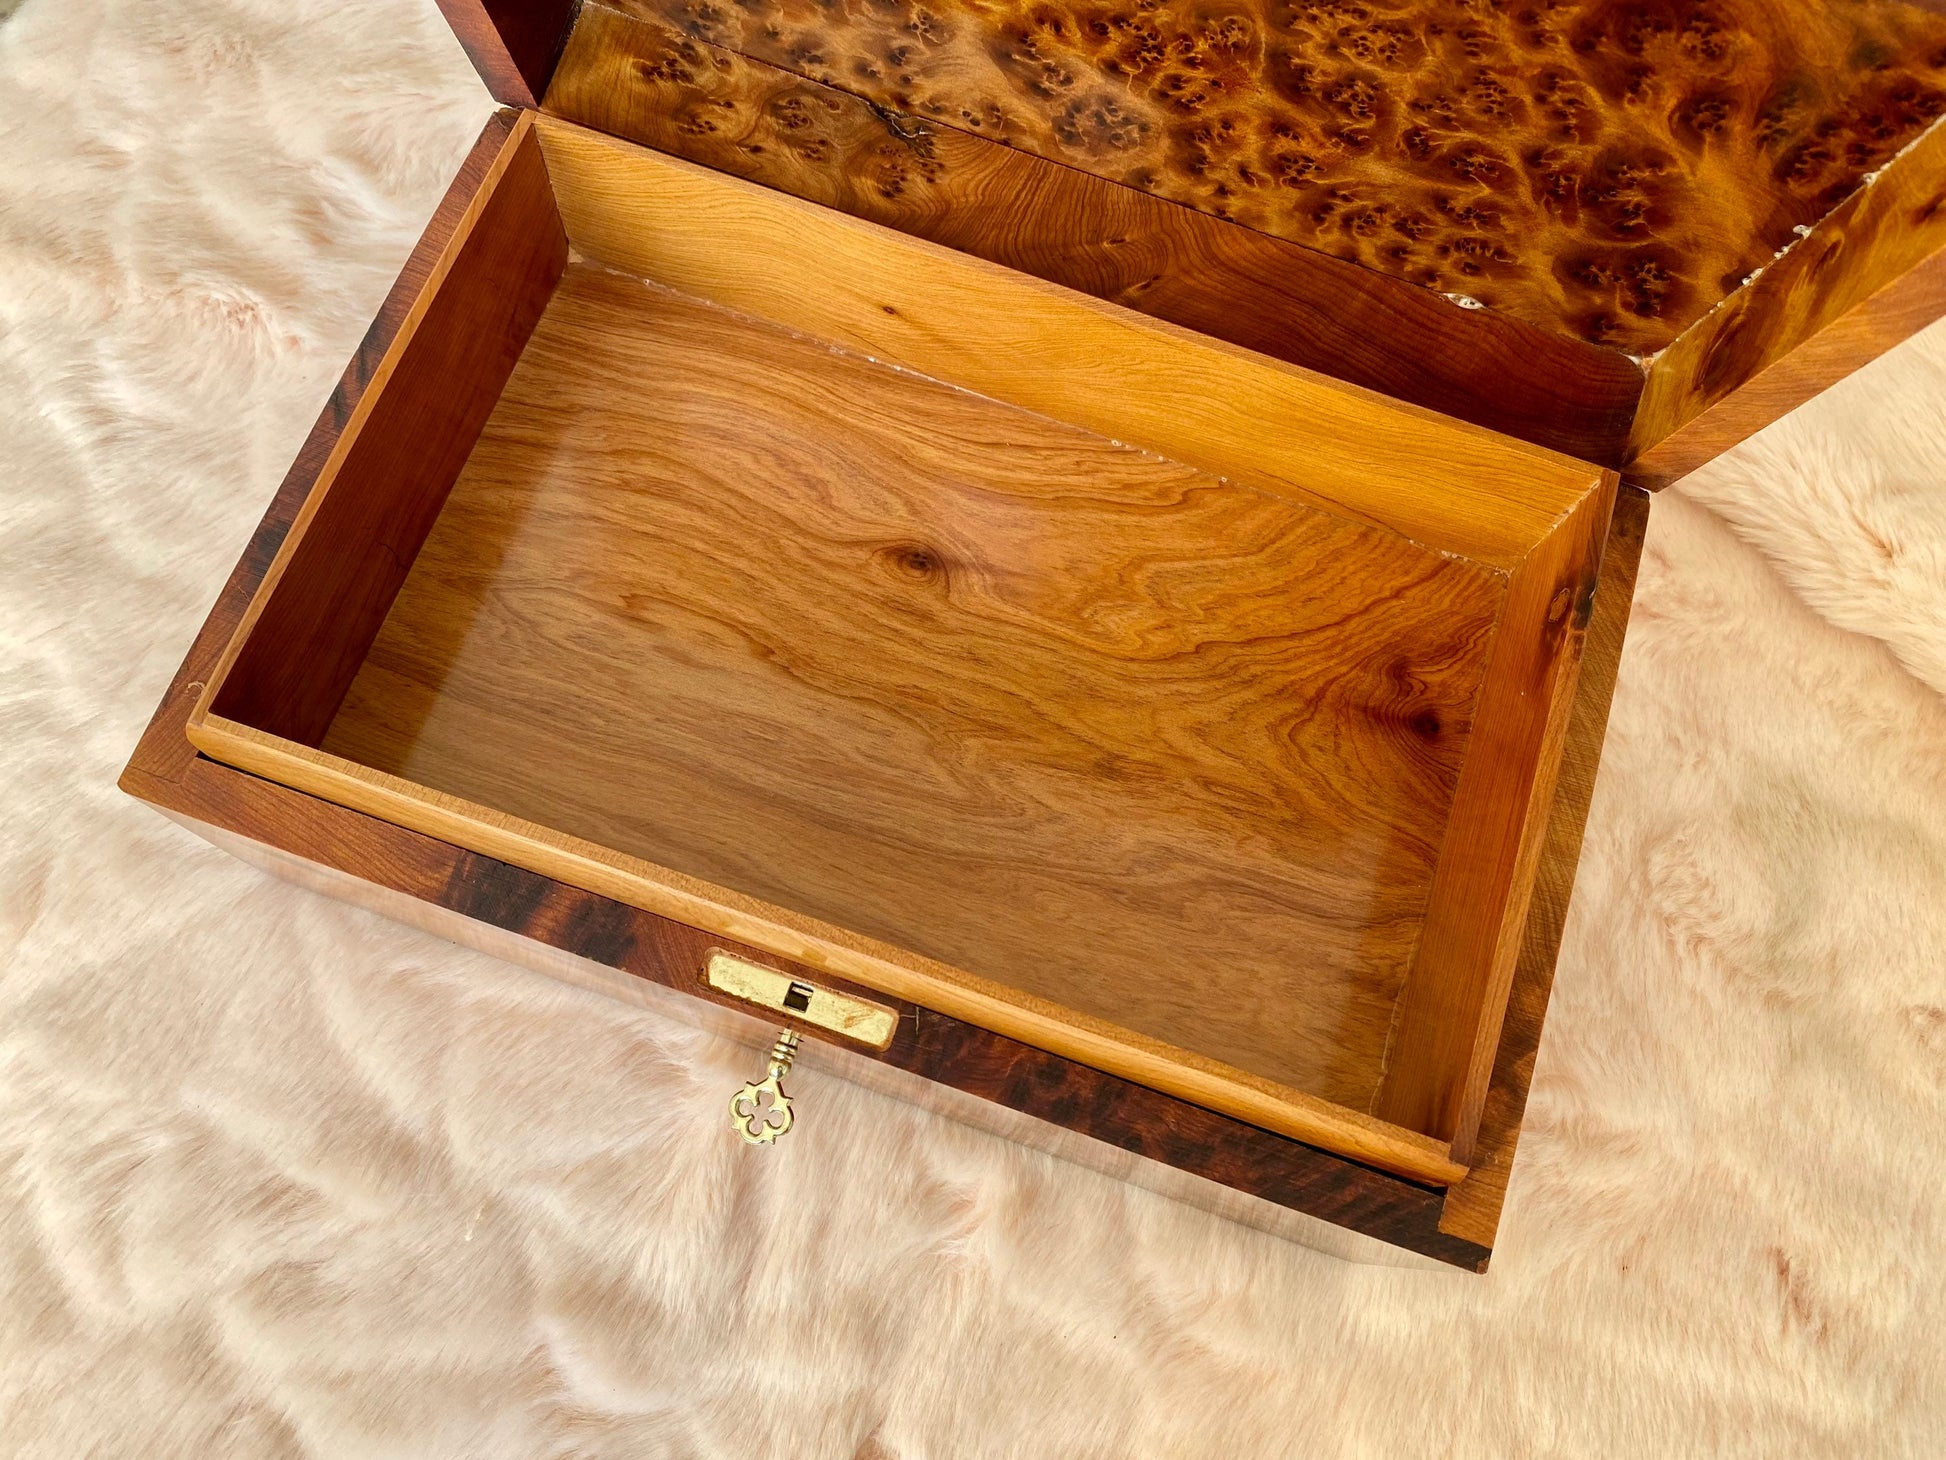 11"x7" Moroccan jewellery Box,large lockable thuya wooden burl Jewelry Box organizer with brass key,couples gift,wedding wood memory box